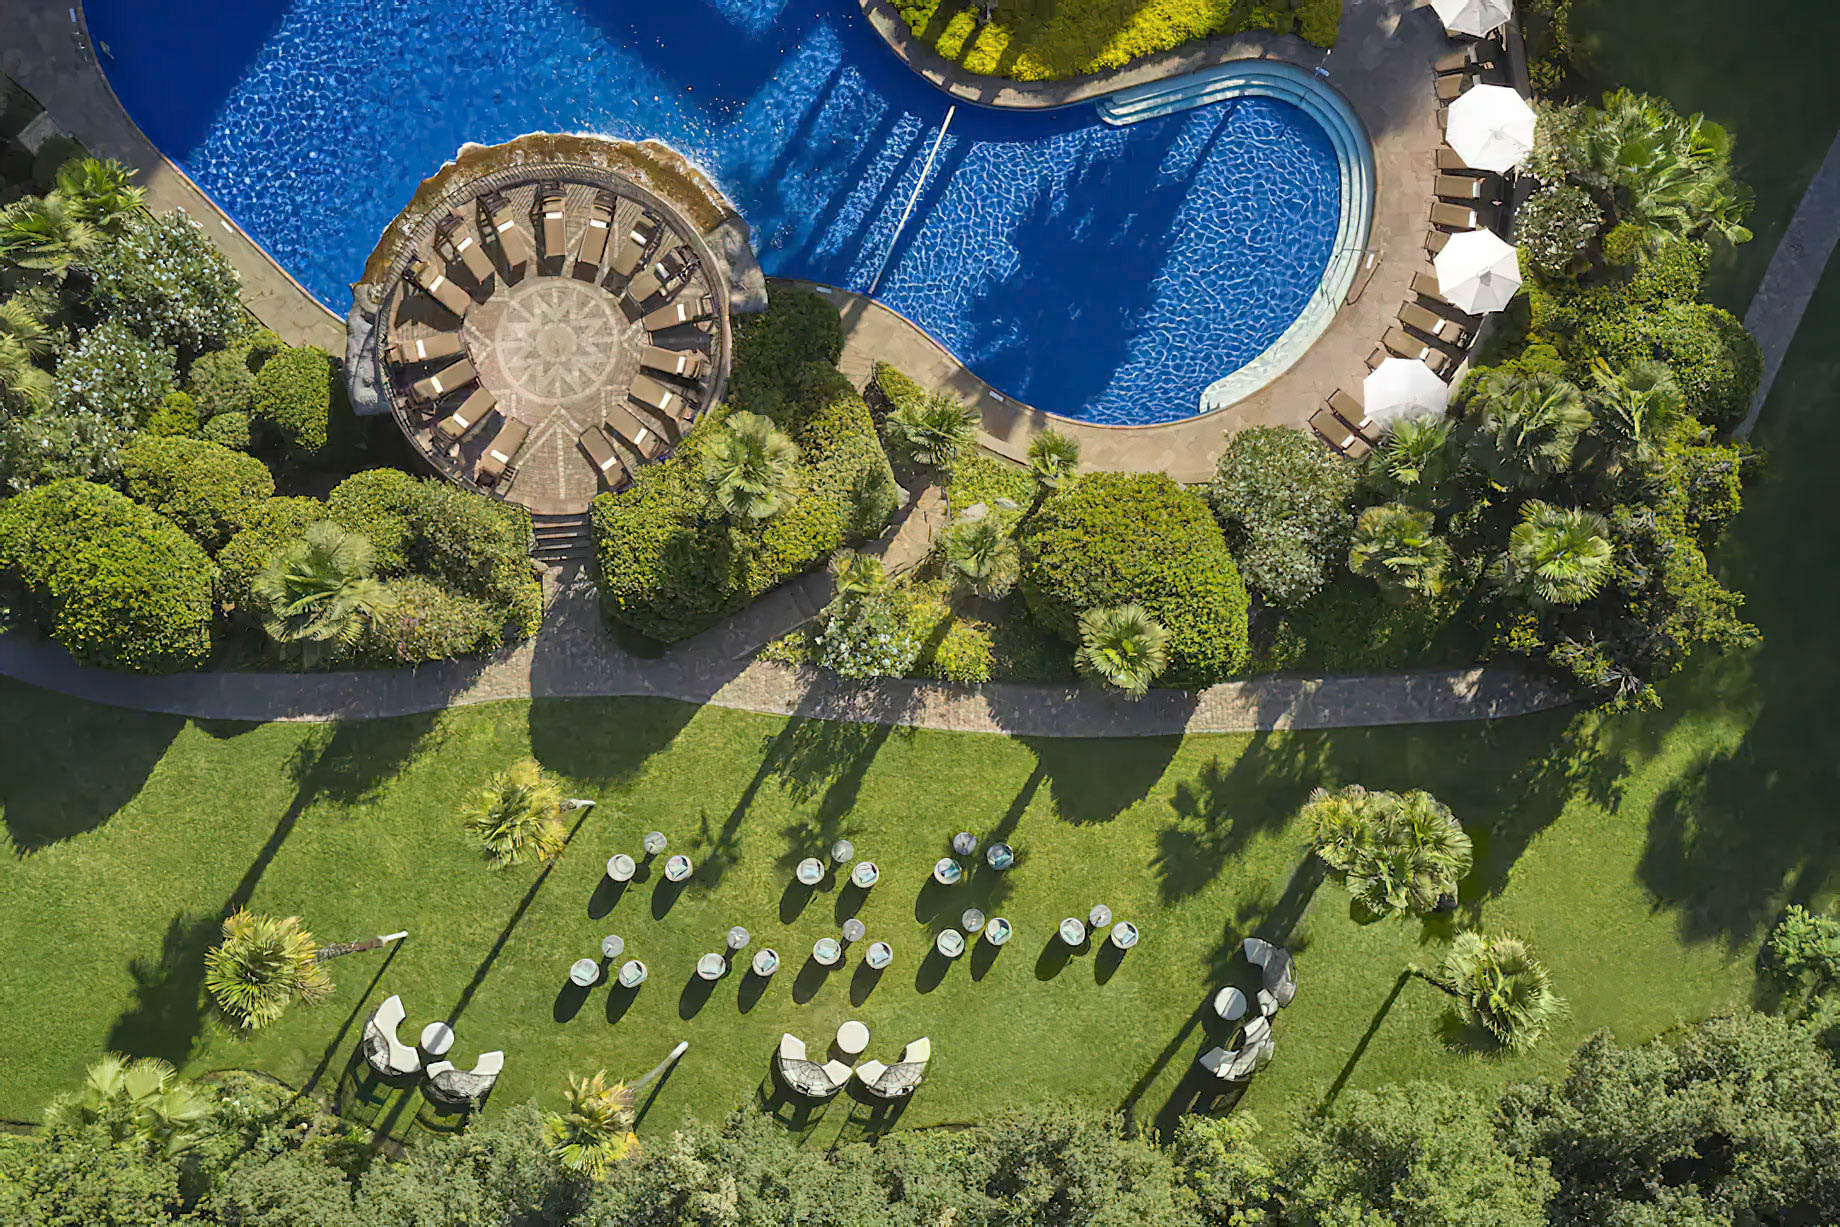 Mandarin Oriental, Santiago Hotel – Santiago, Chile – Exterior Garden and Pool Overhead View